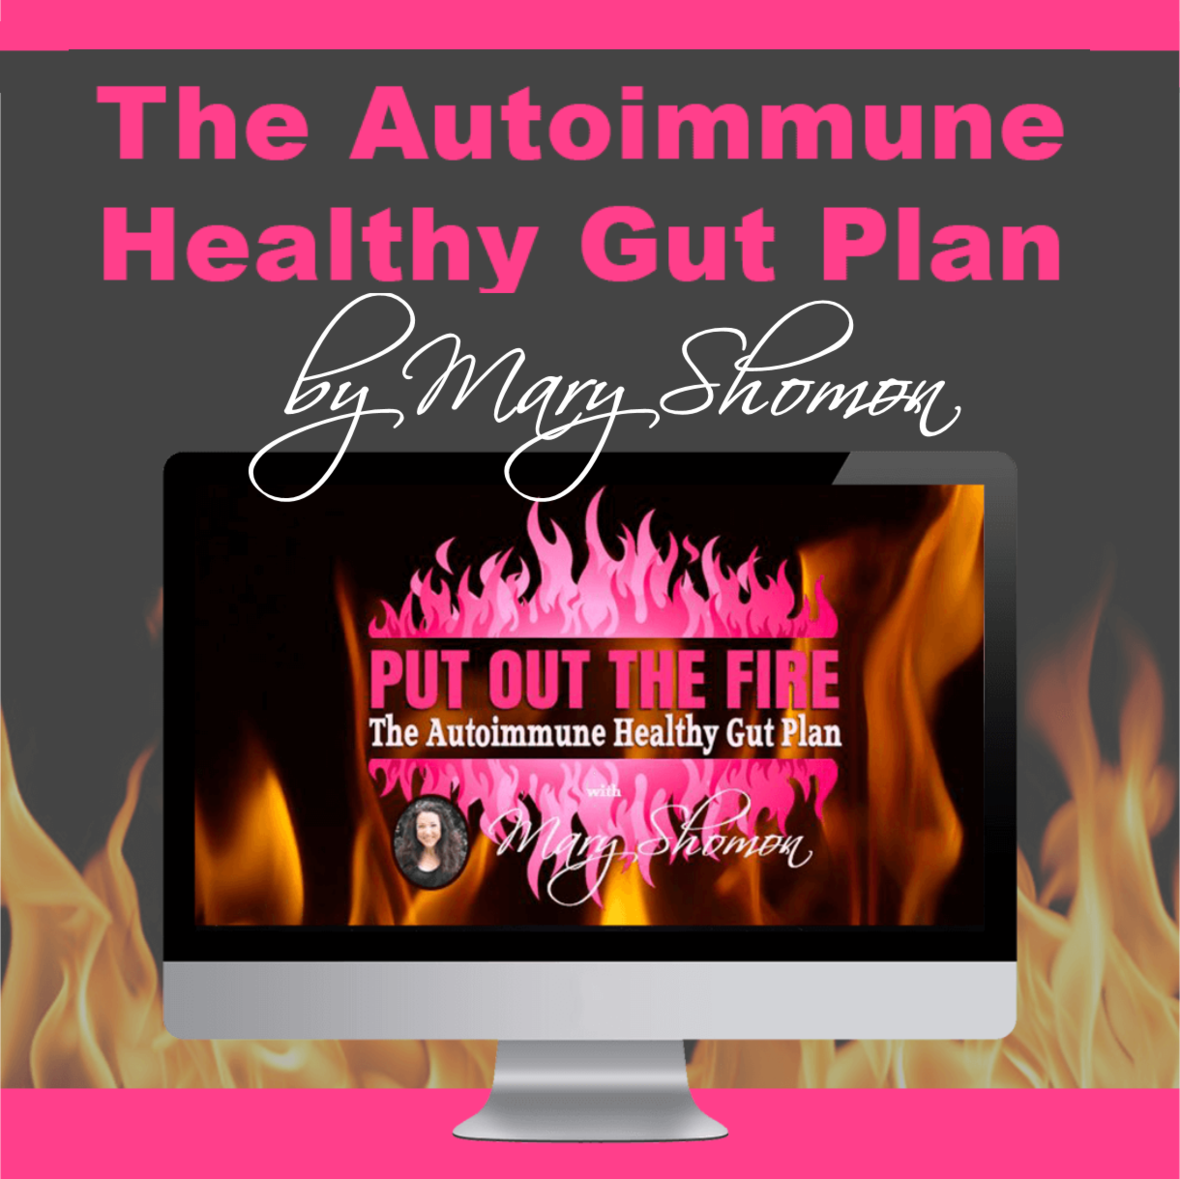 The Autoimmune Healthy Gut Plan by Mary Shomon